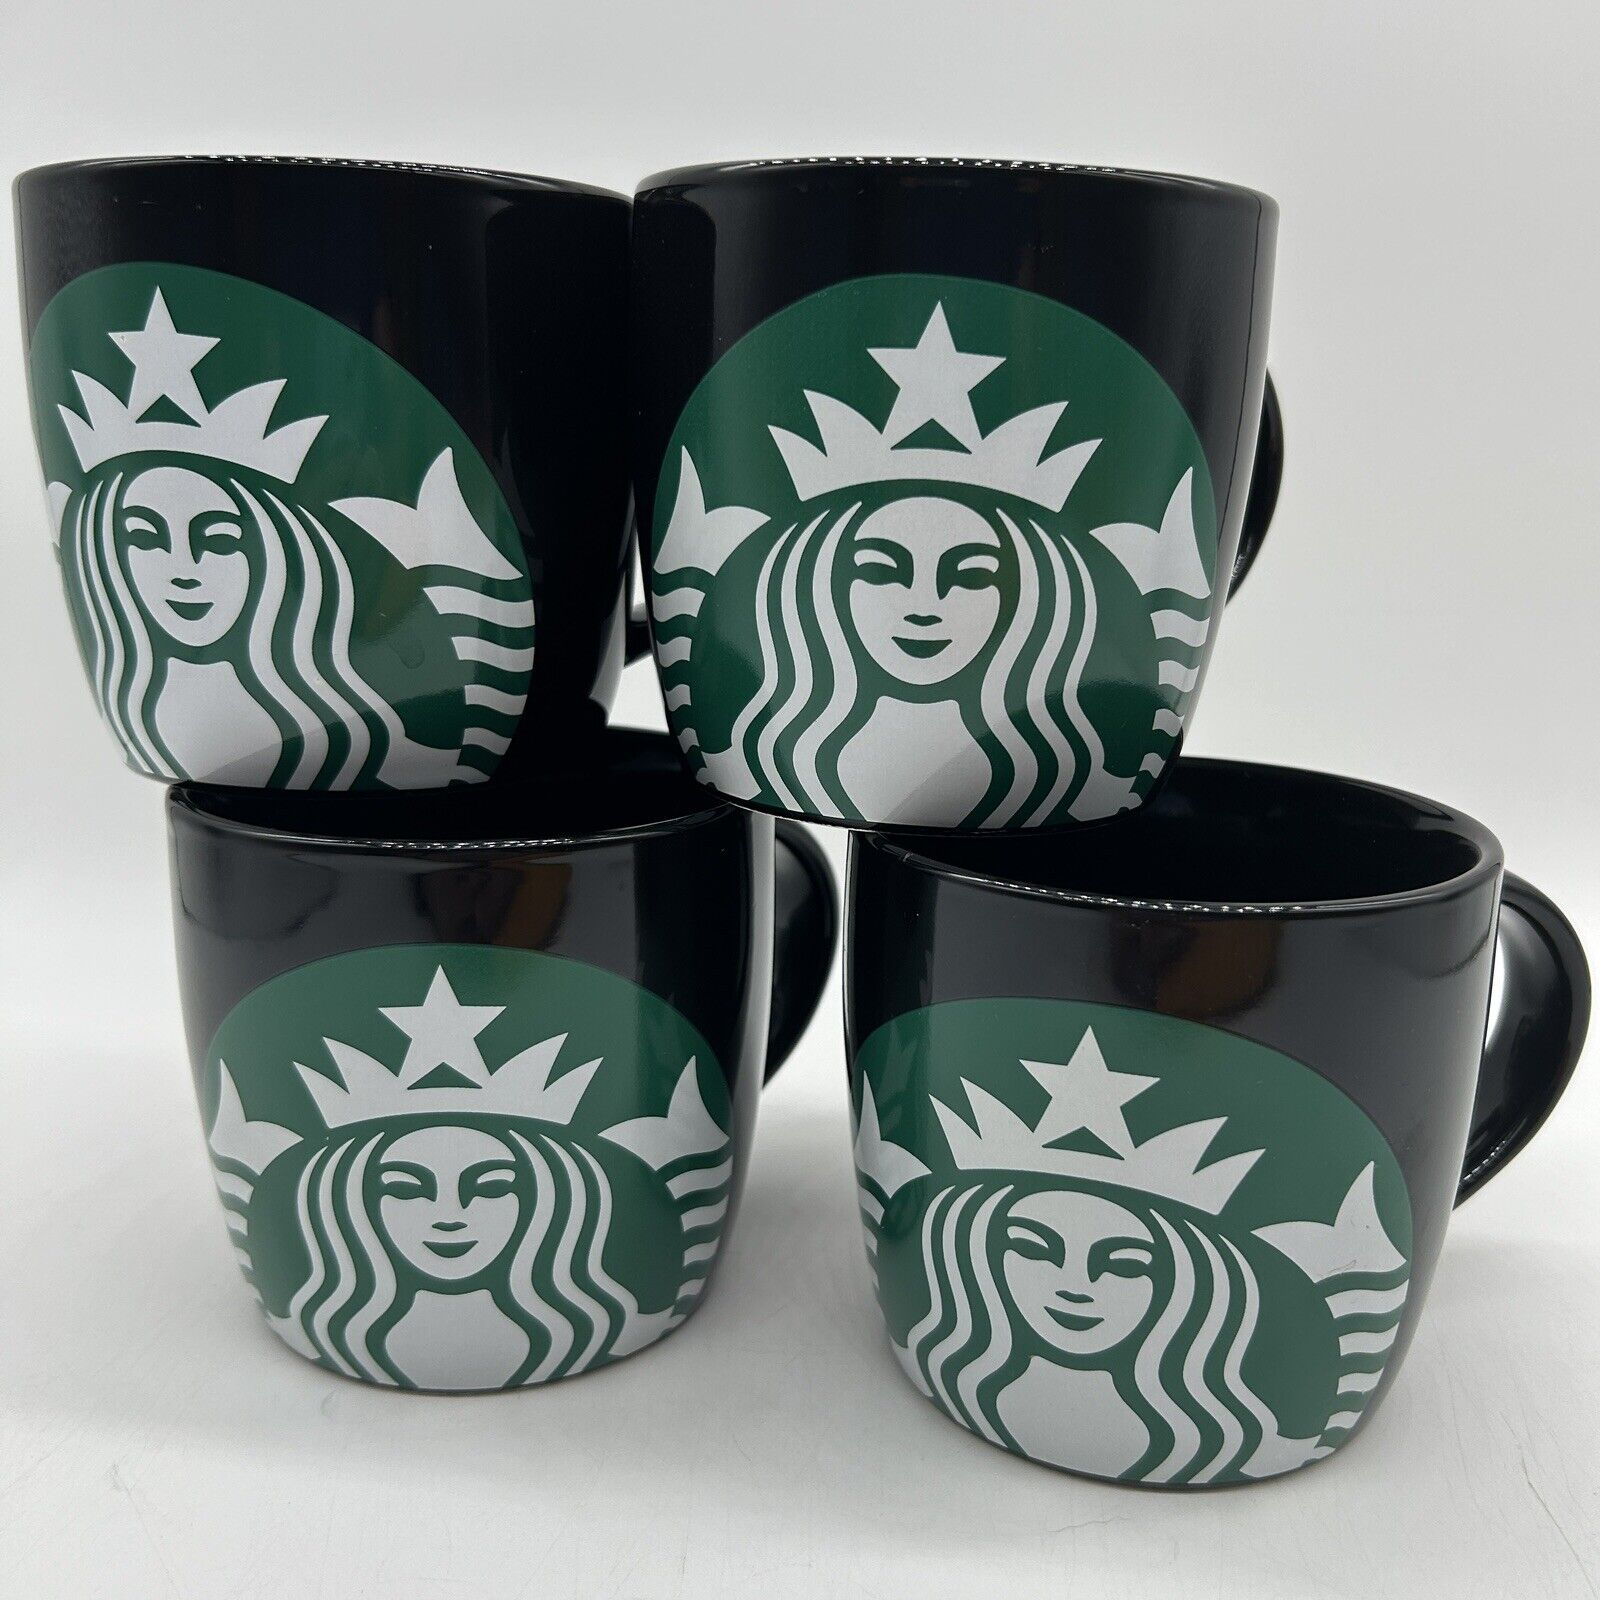 Set of 4 Starbucks 14 Oz Coffee Mugs Black w/ Green Siren Logo - Four New Mugs